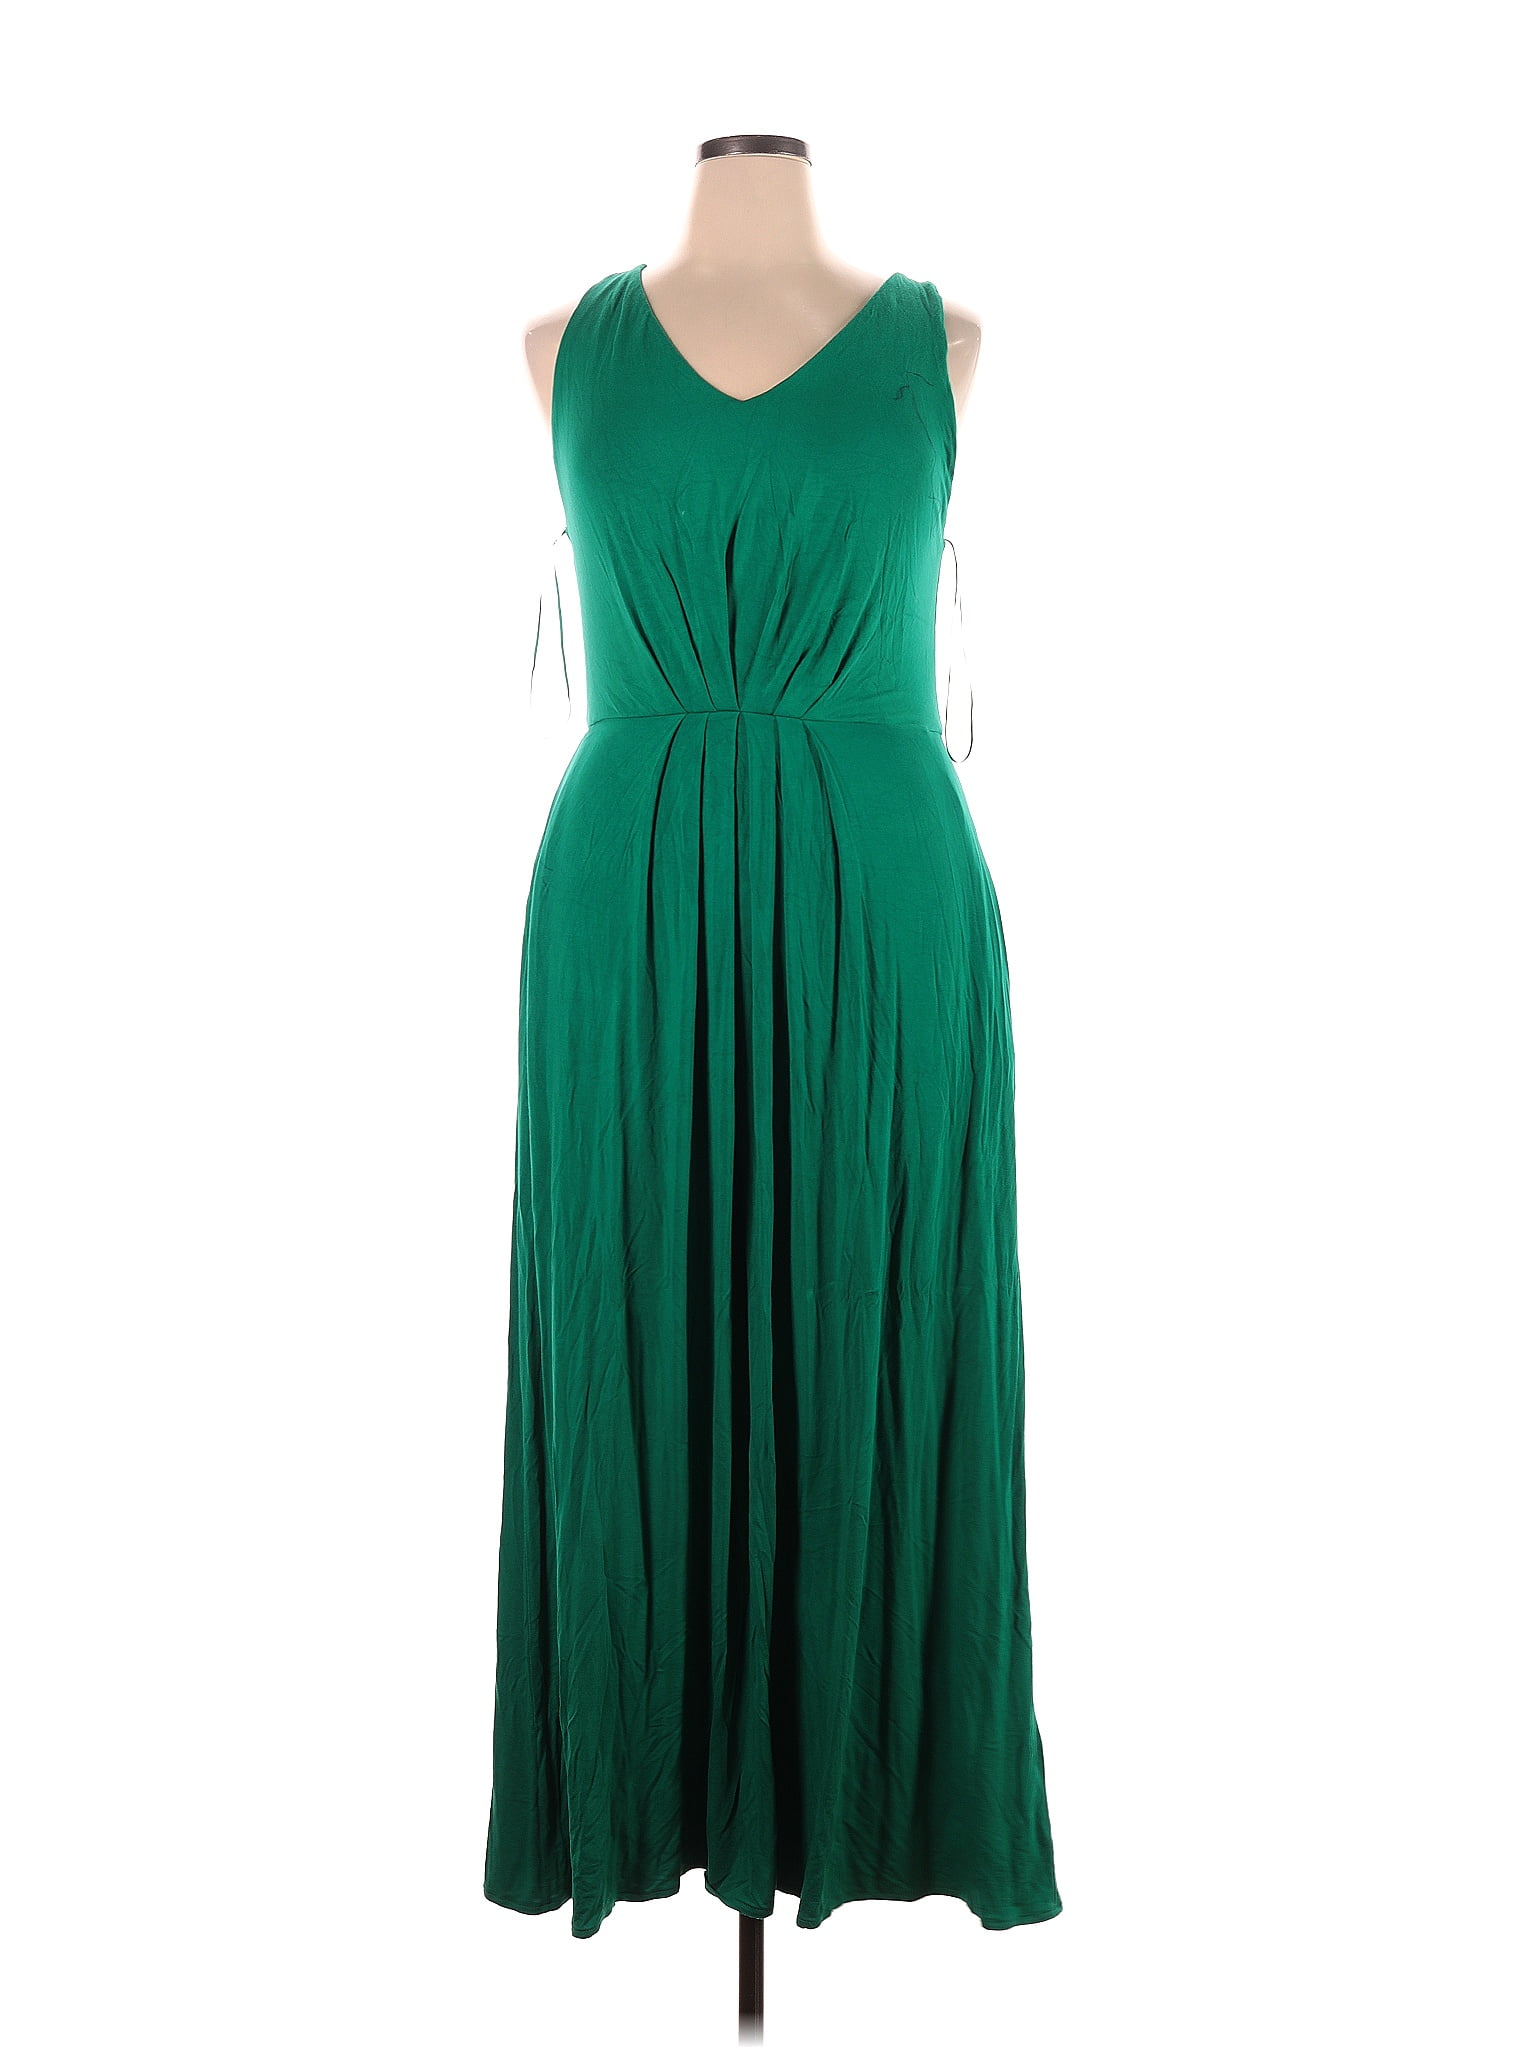 Adrienne Vittadini Solid Green Casual Dress Size XL - 72% off